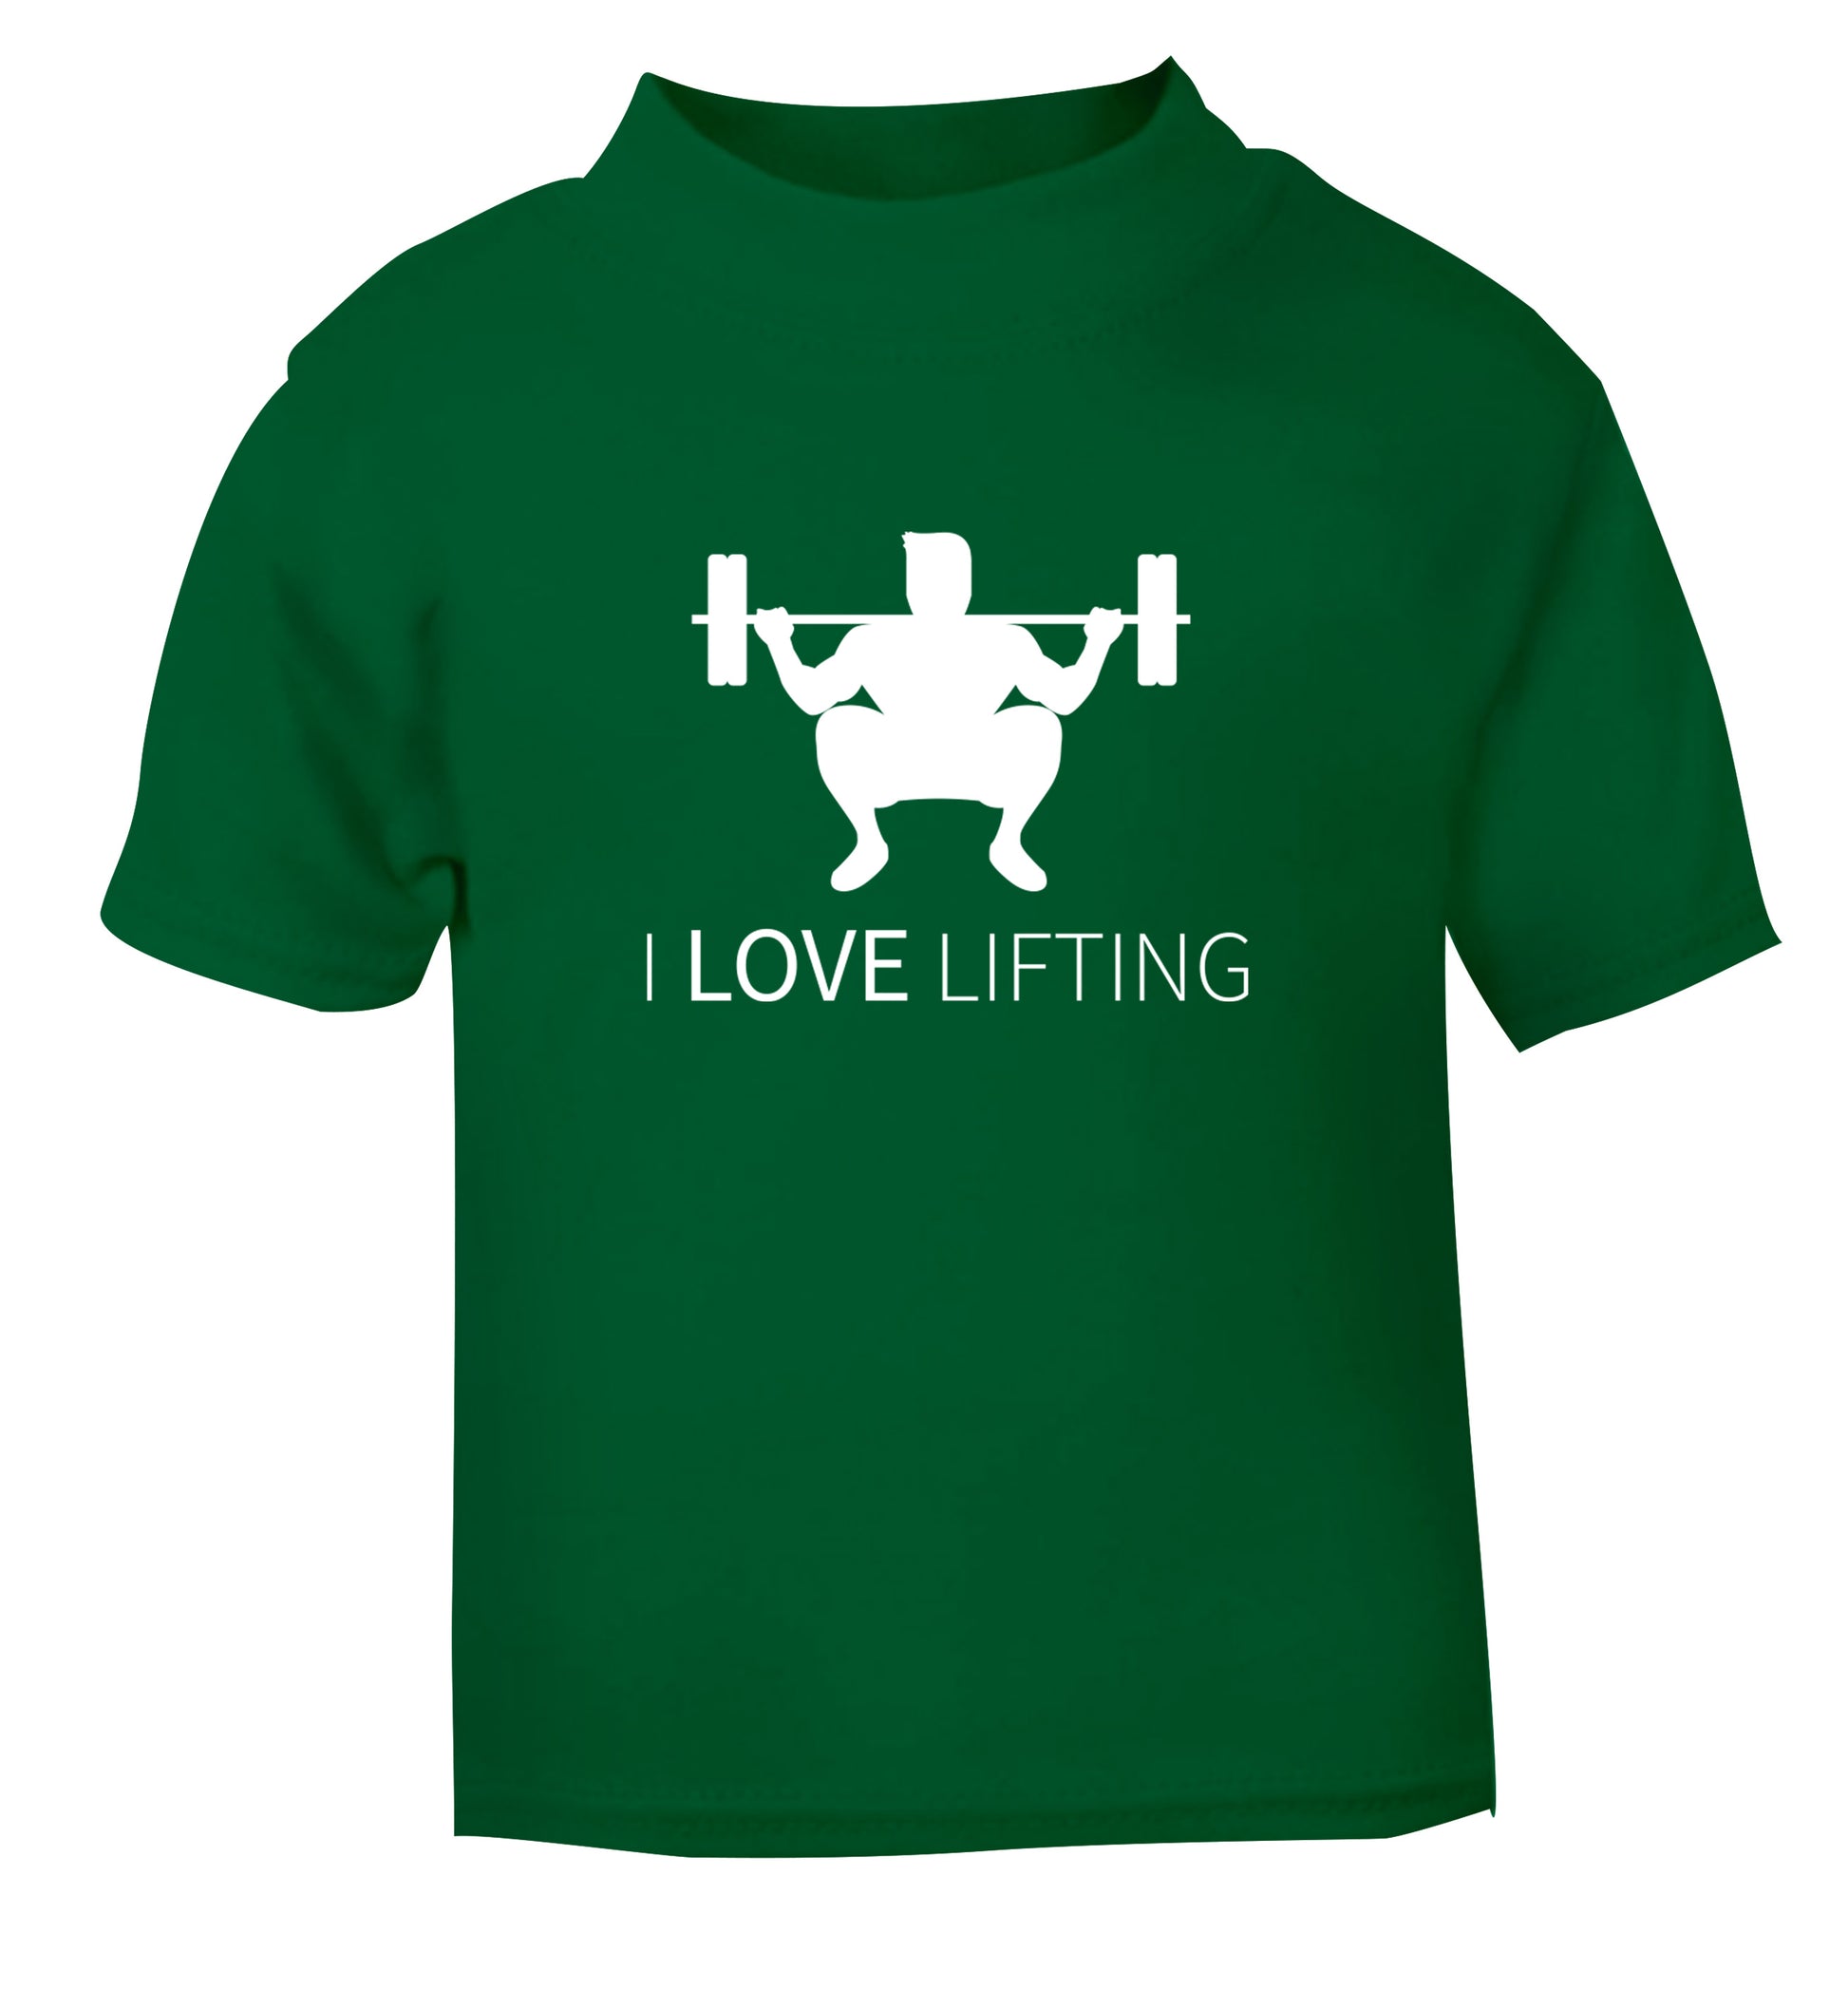 I Love Lifting green Baby Toddler Tshirt 2 Years